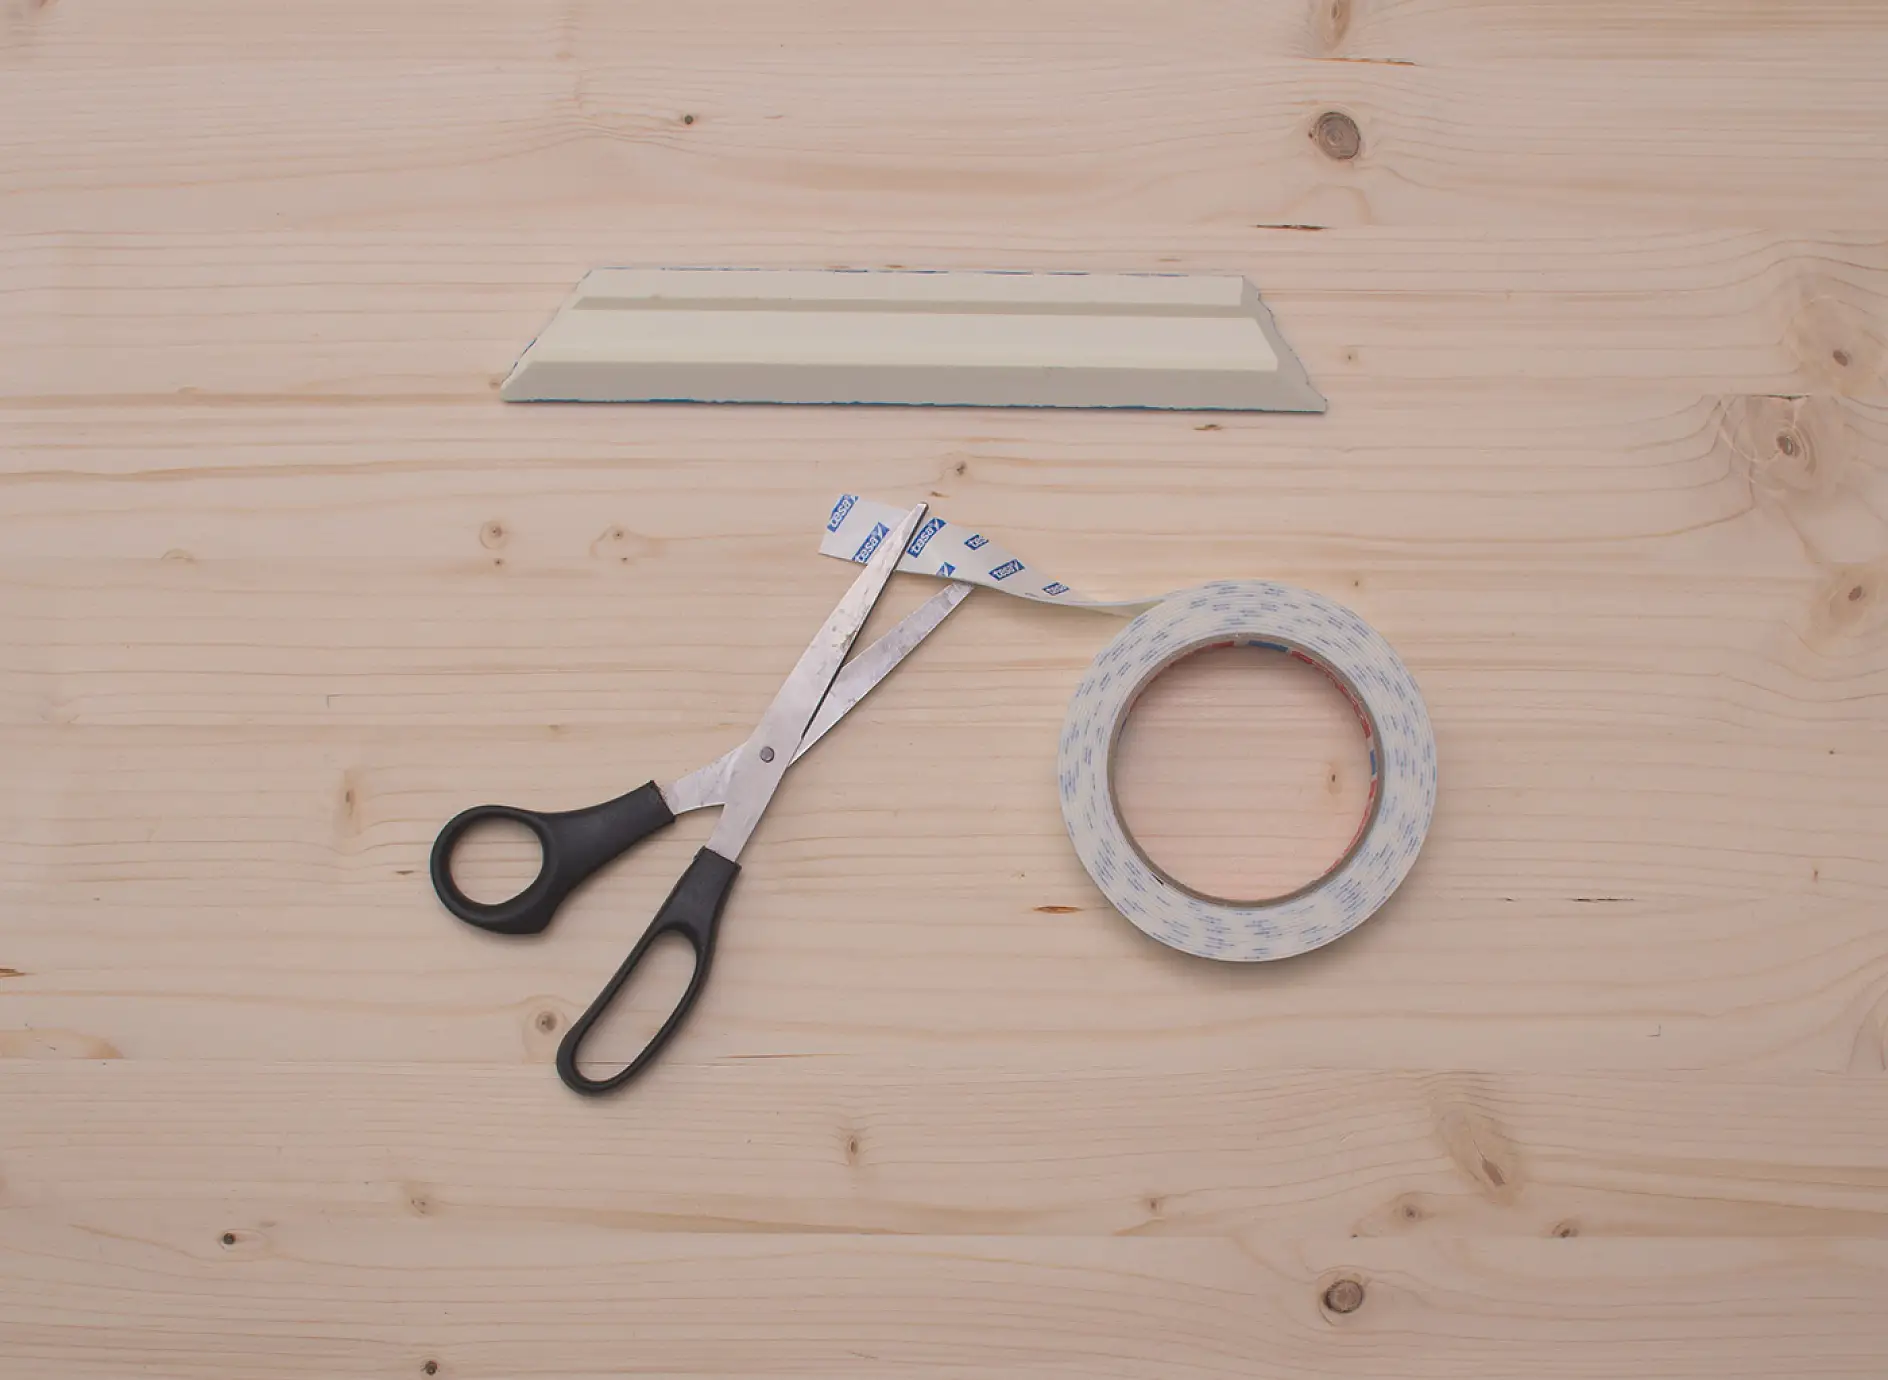 DIY Smart-TV / Step 5: Cut tape